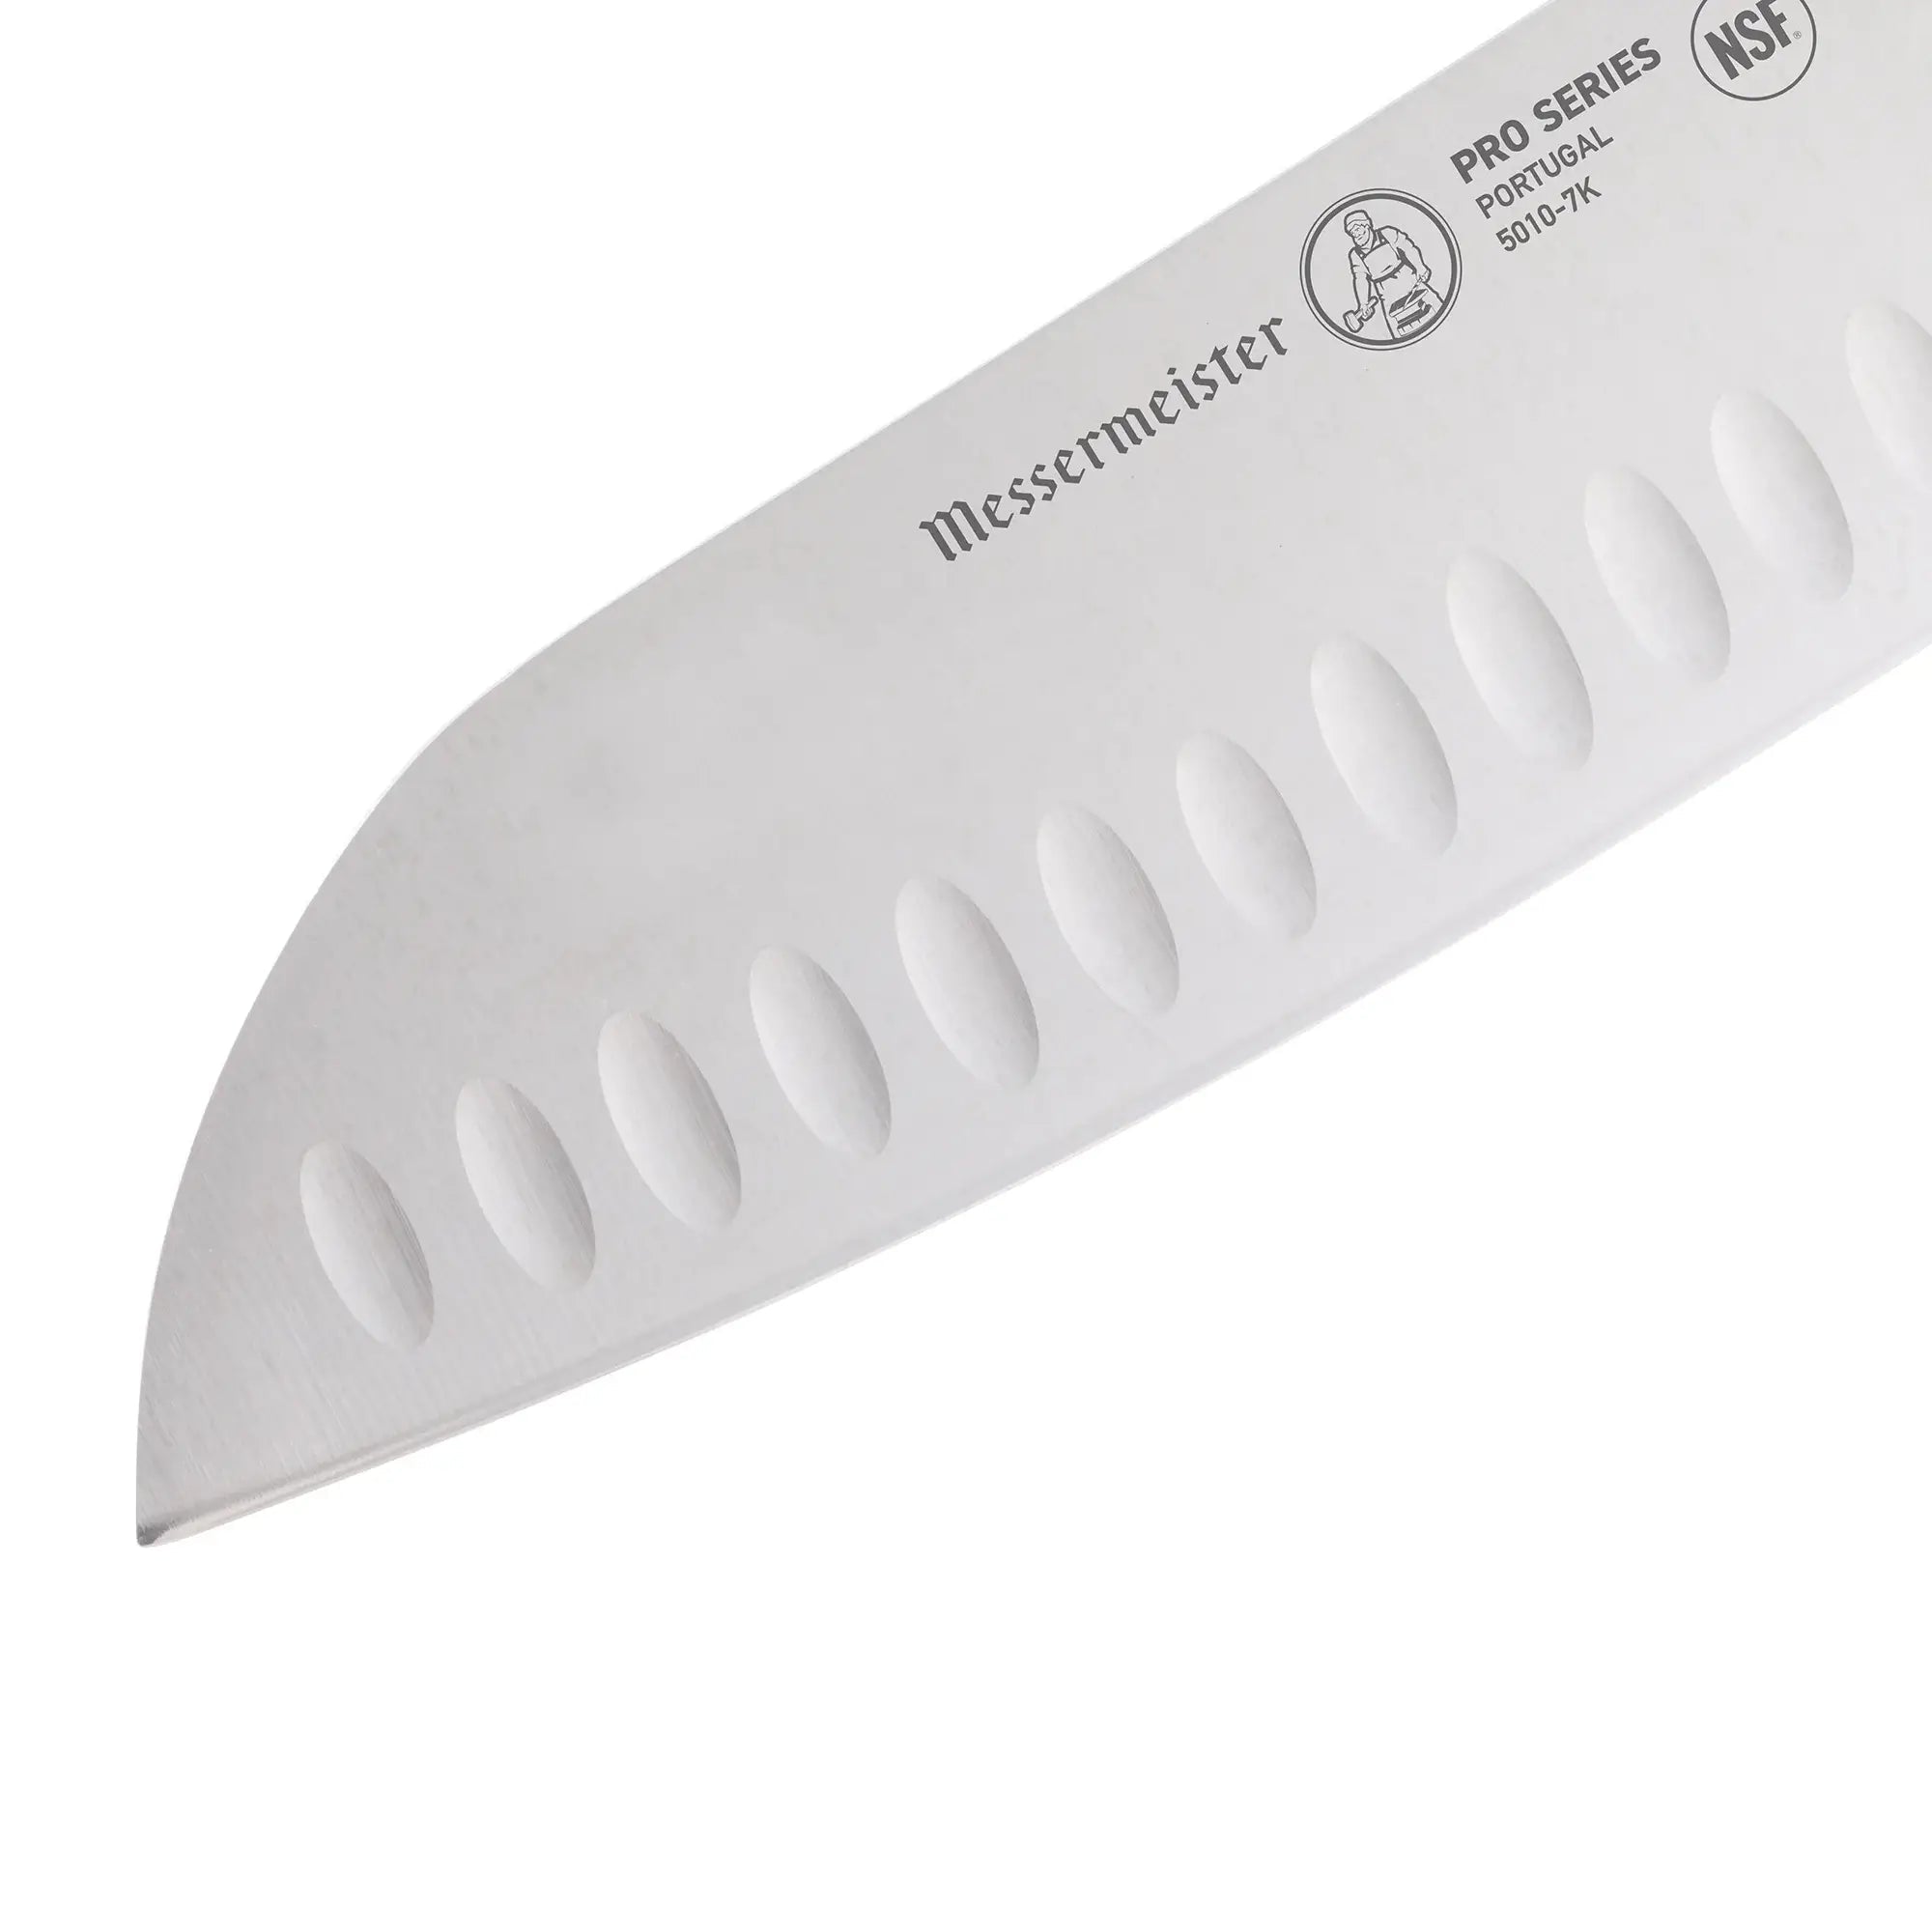 Messermeister - Pro Series Kullenschliff Santoku Knife - 7" - Pacific Flyway Supplies